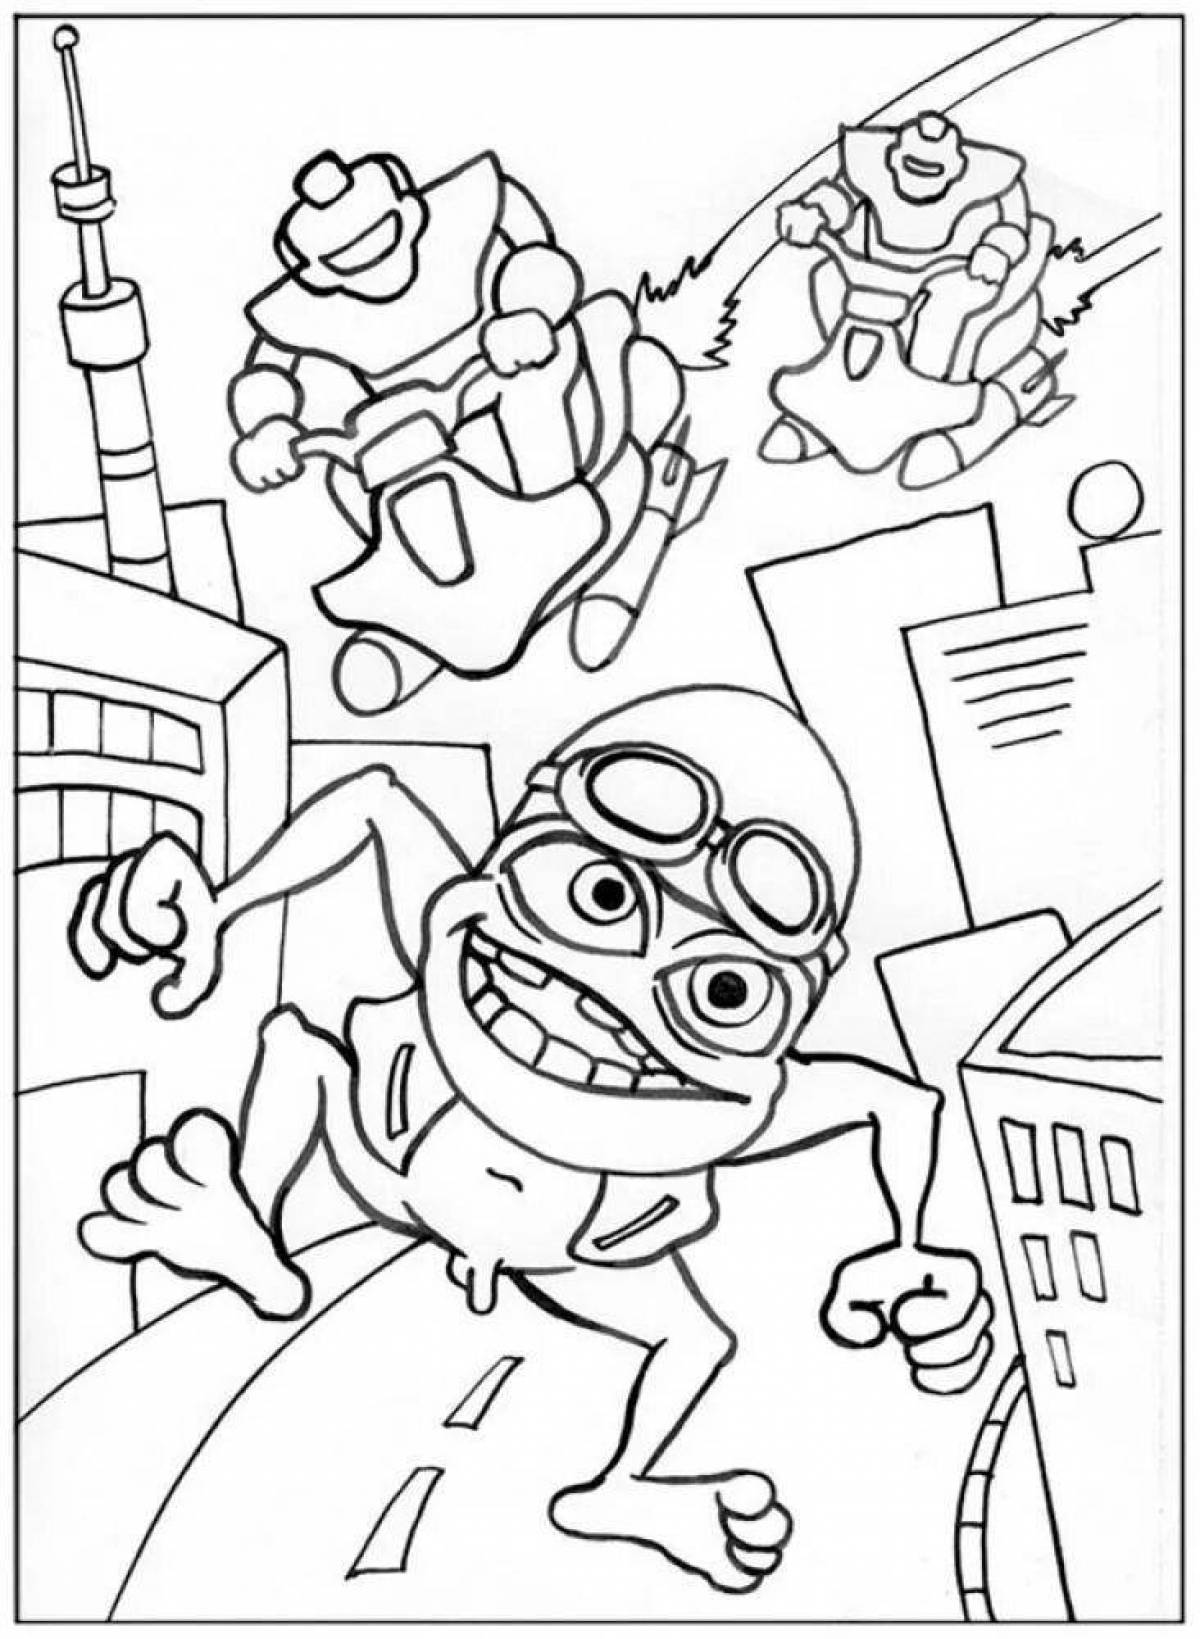 Fun coloring book crazy frog